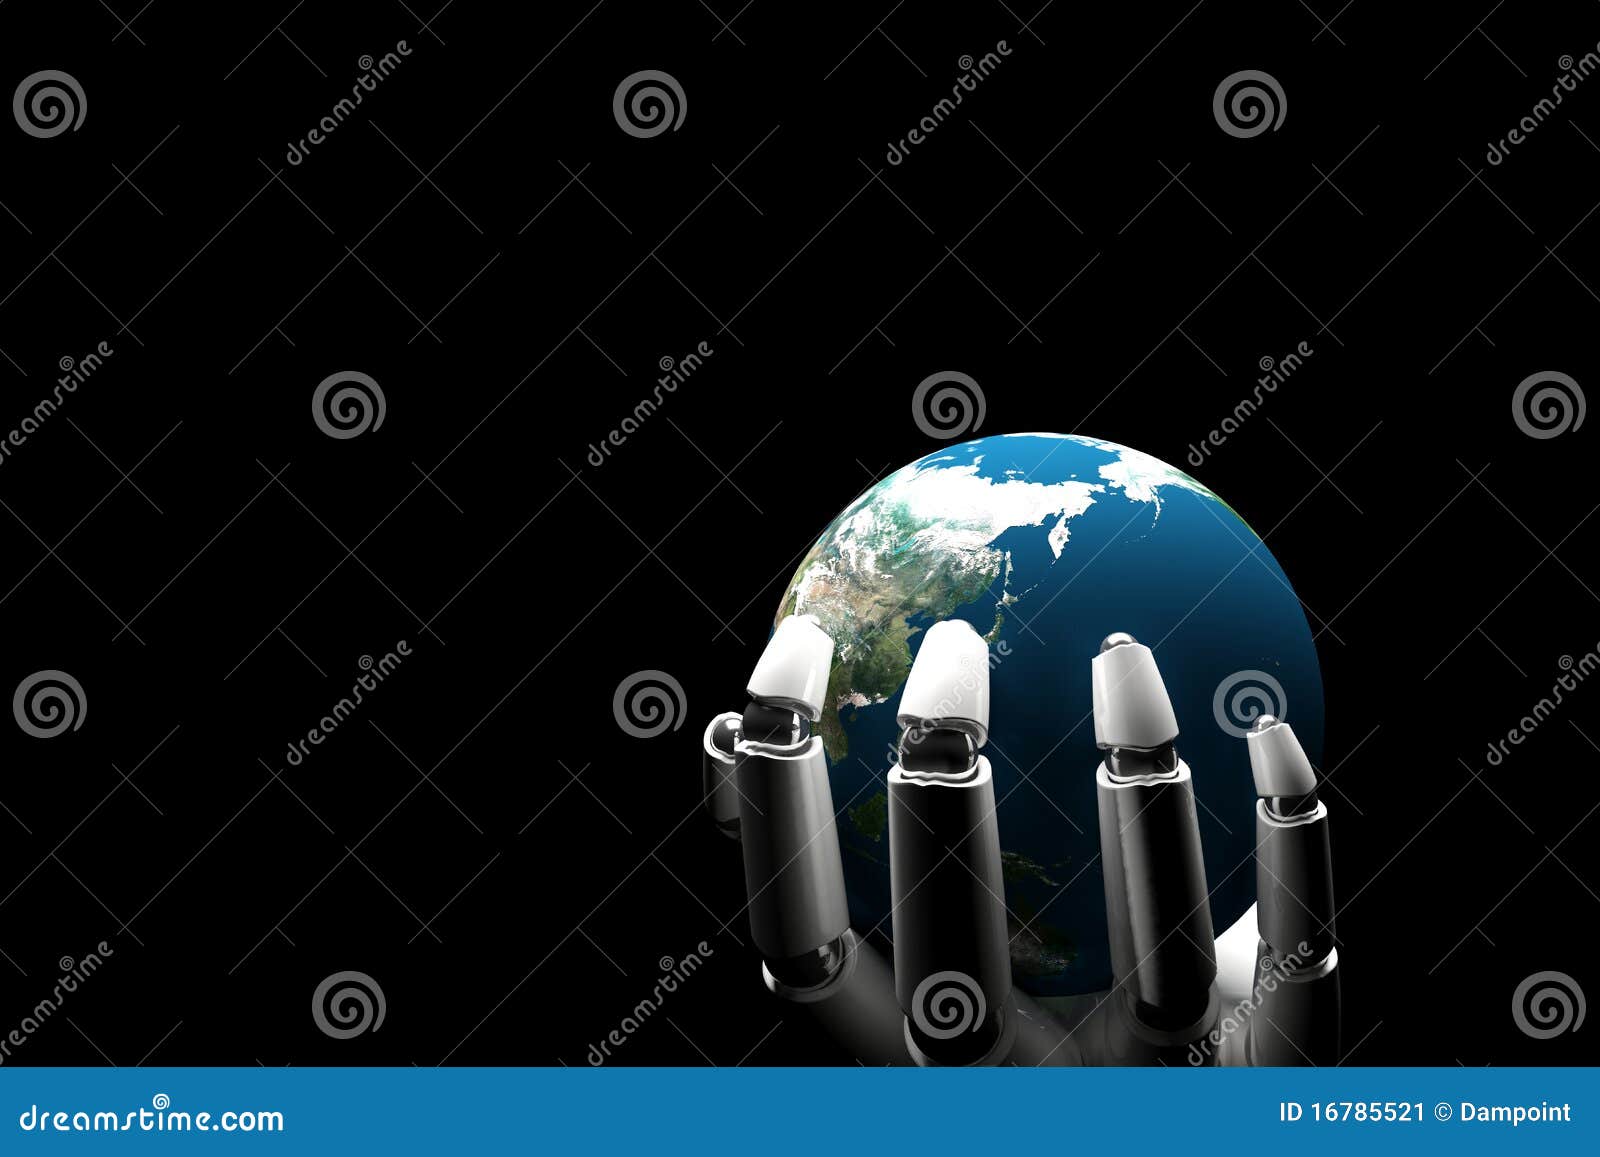 cyborg hand holding the earth